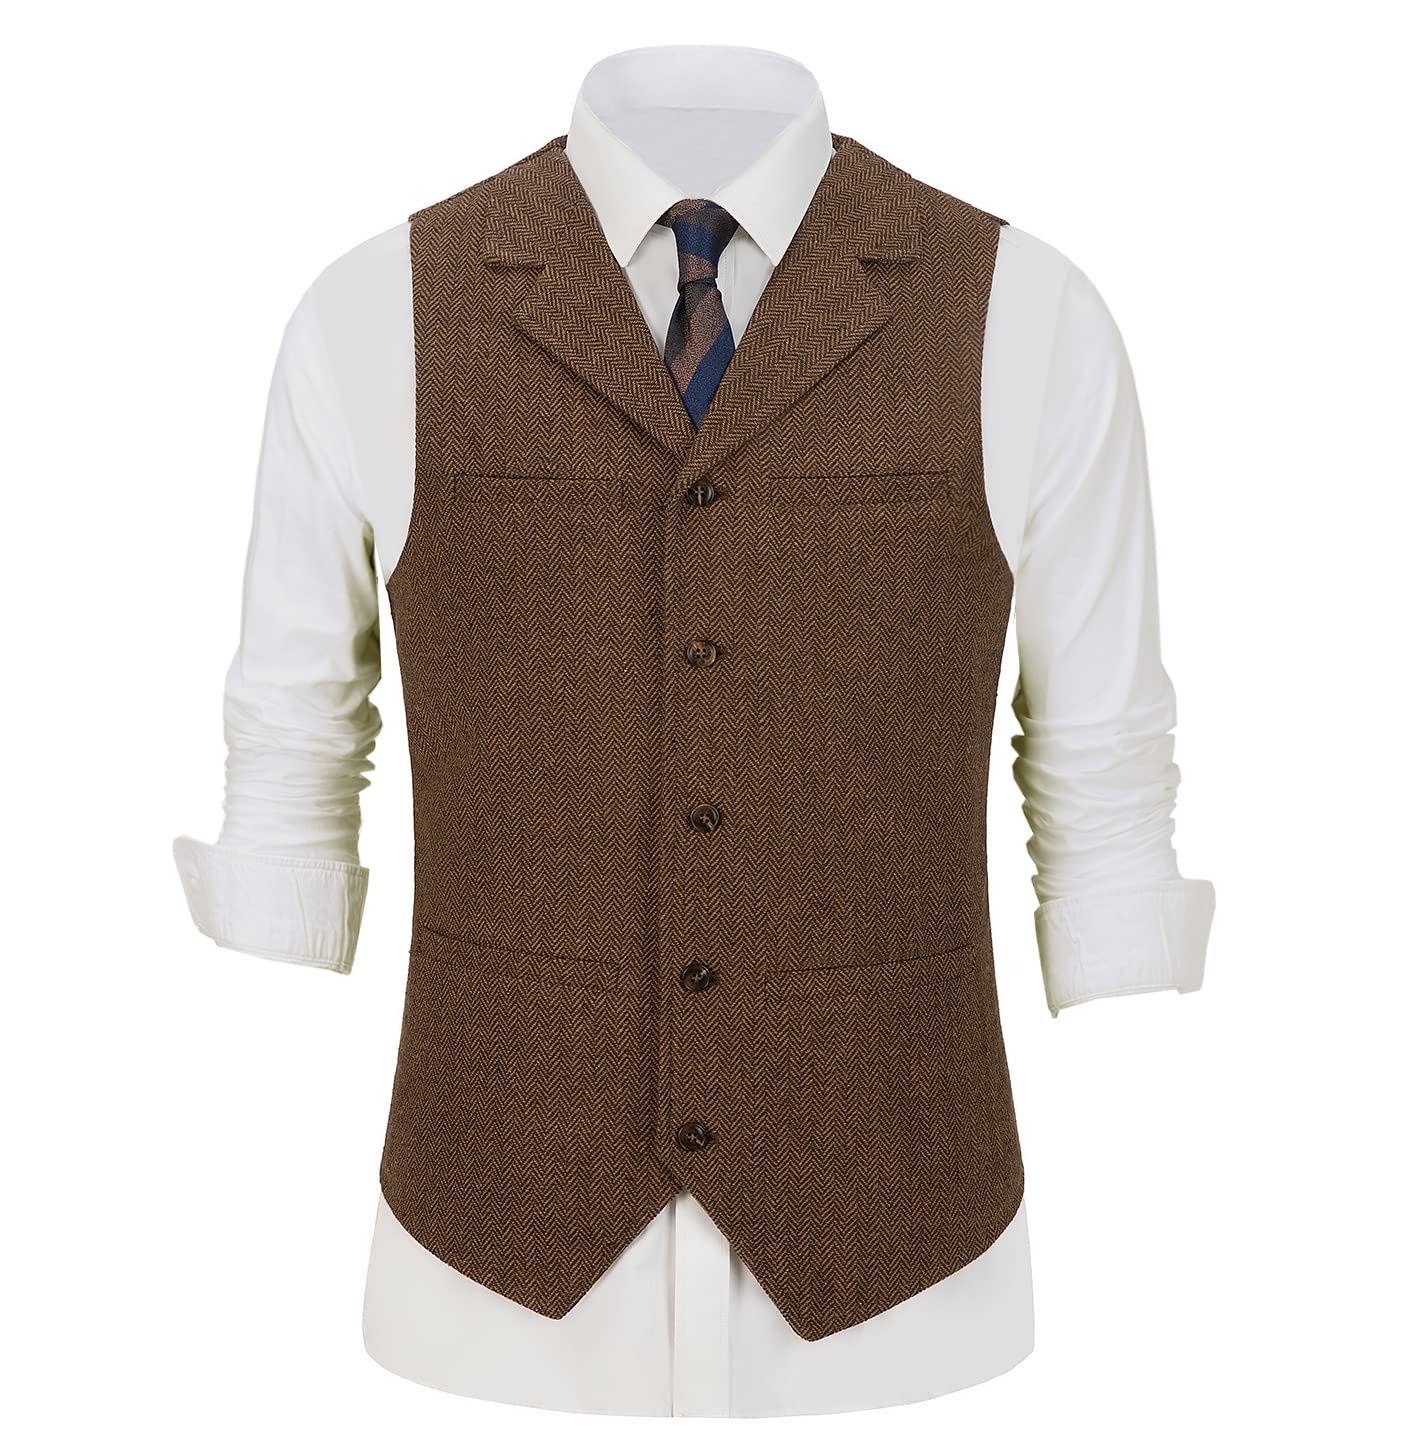 BYLUNTA Hunting Aged Mens Tweed Waistcoats Herringbone Vests Wedding Retro Casual Wool Business XS-3XL